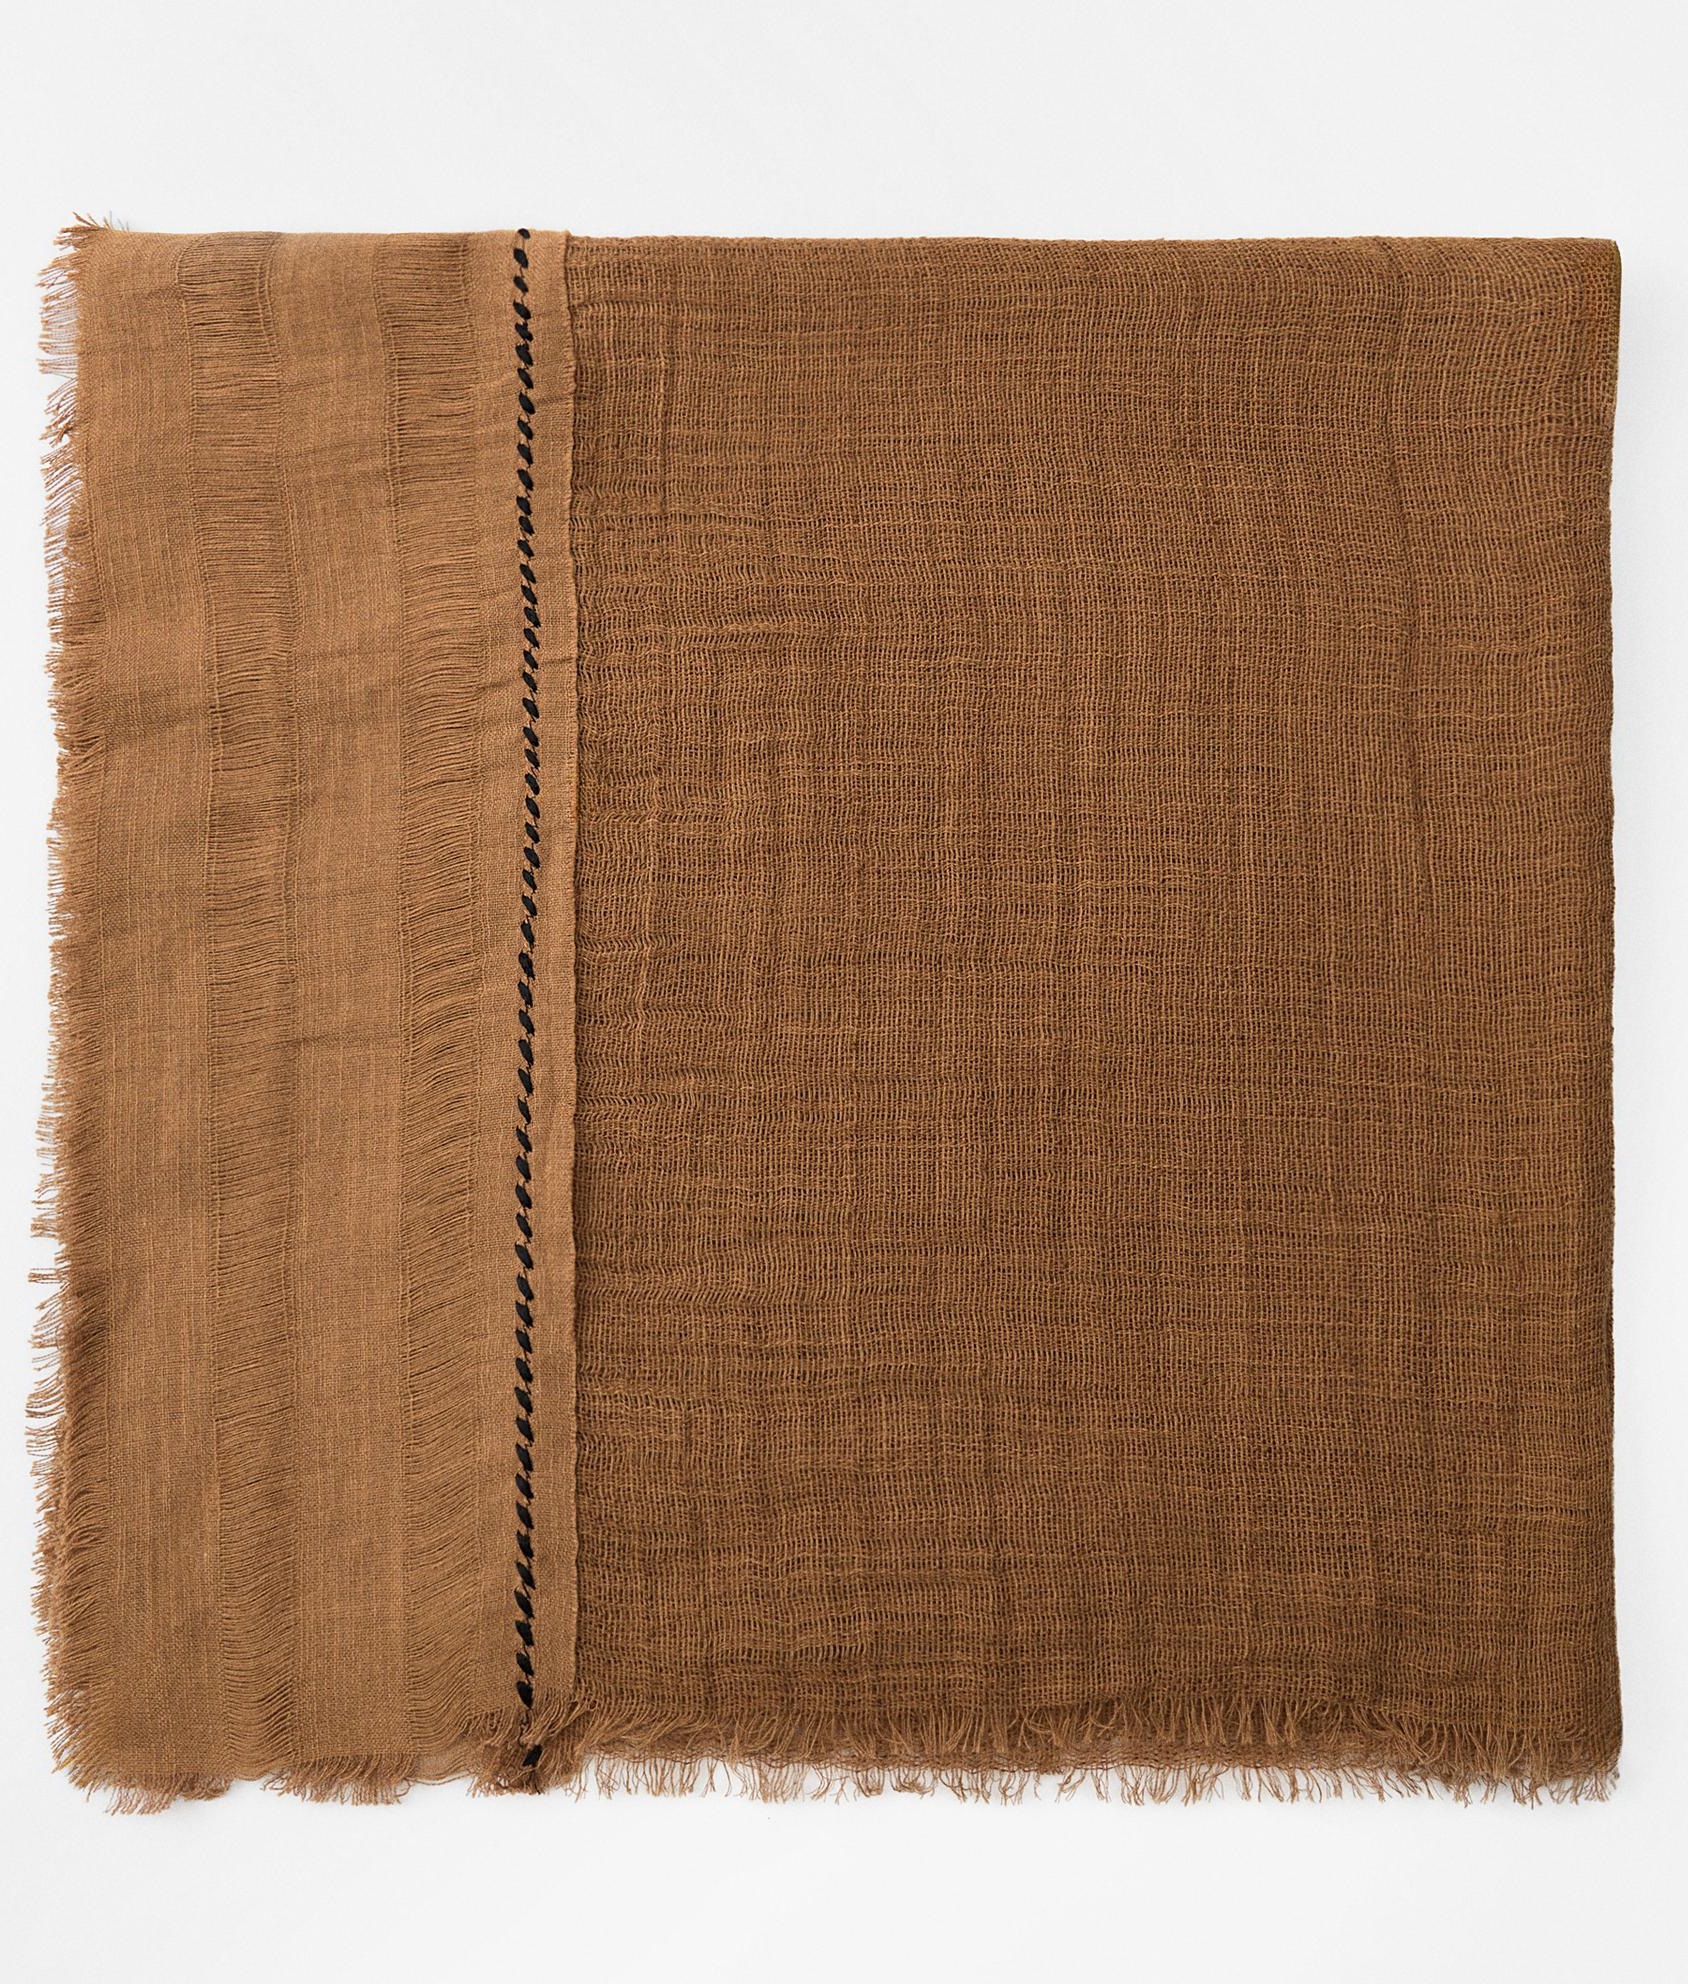 Шарф Zara Linen Blend With Topstitching, коричневый блейзер zara oversize with topstitching рыжевато коричневый